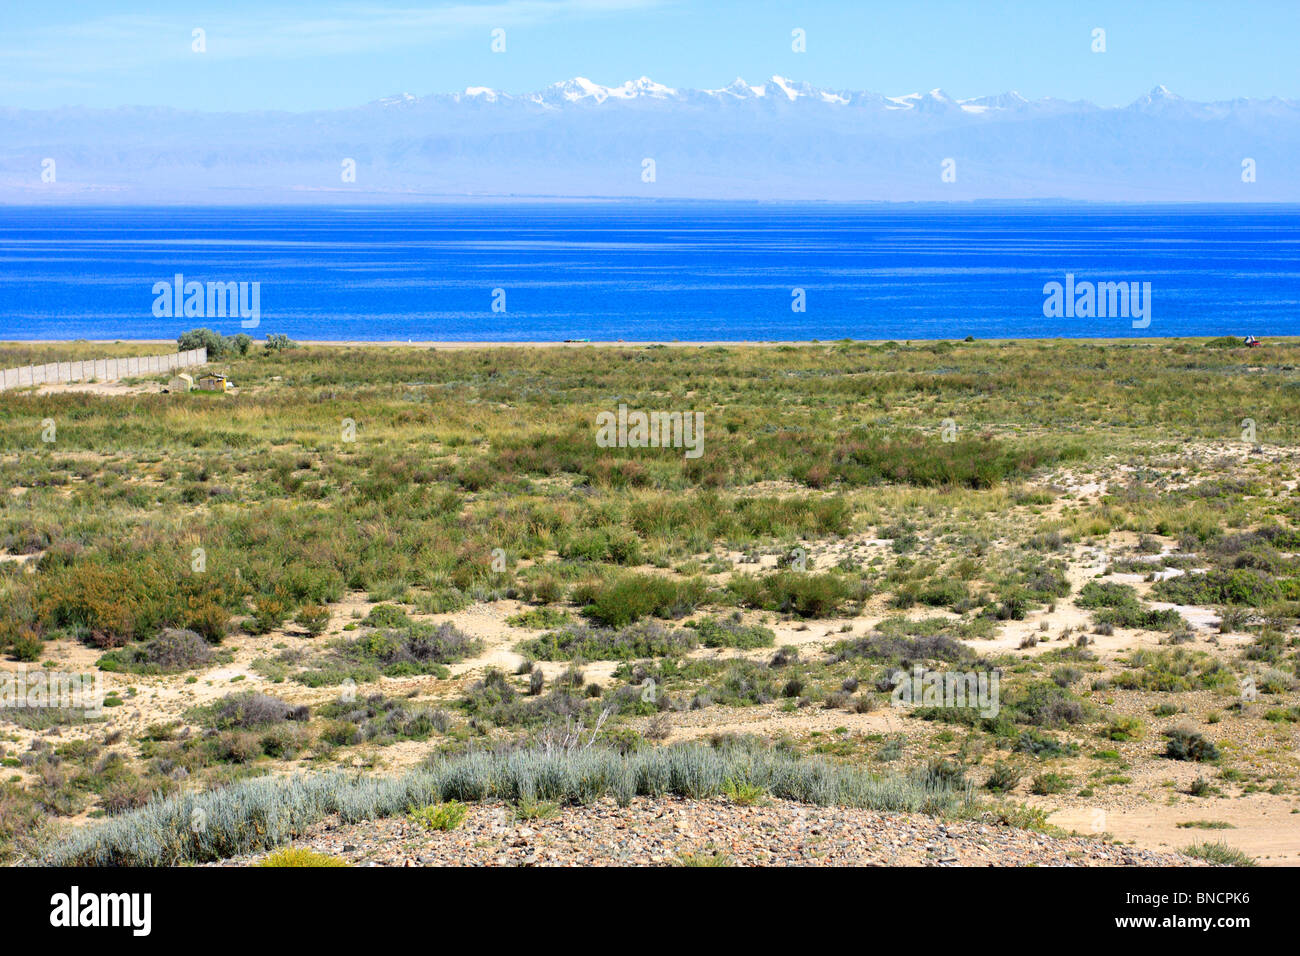 Kungey-Ala-Too-Range auf der Nordseite des Sees Issyk-Kul, Kirgisistan Stockfoto